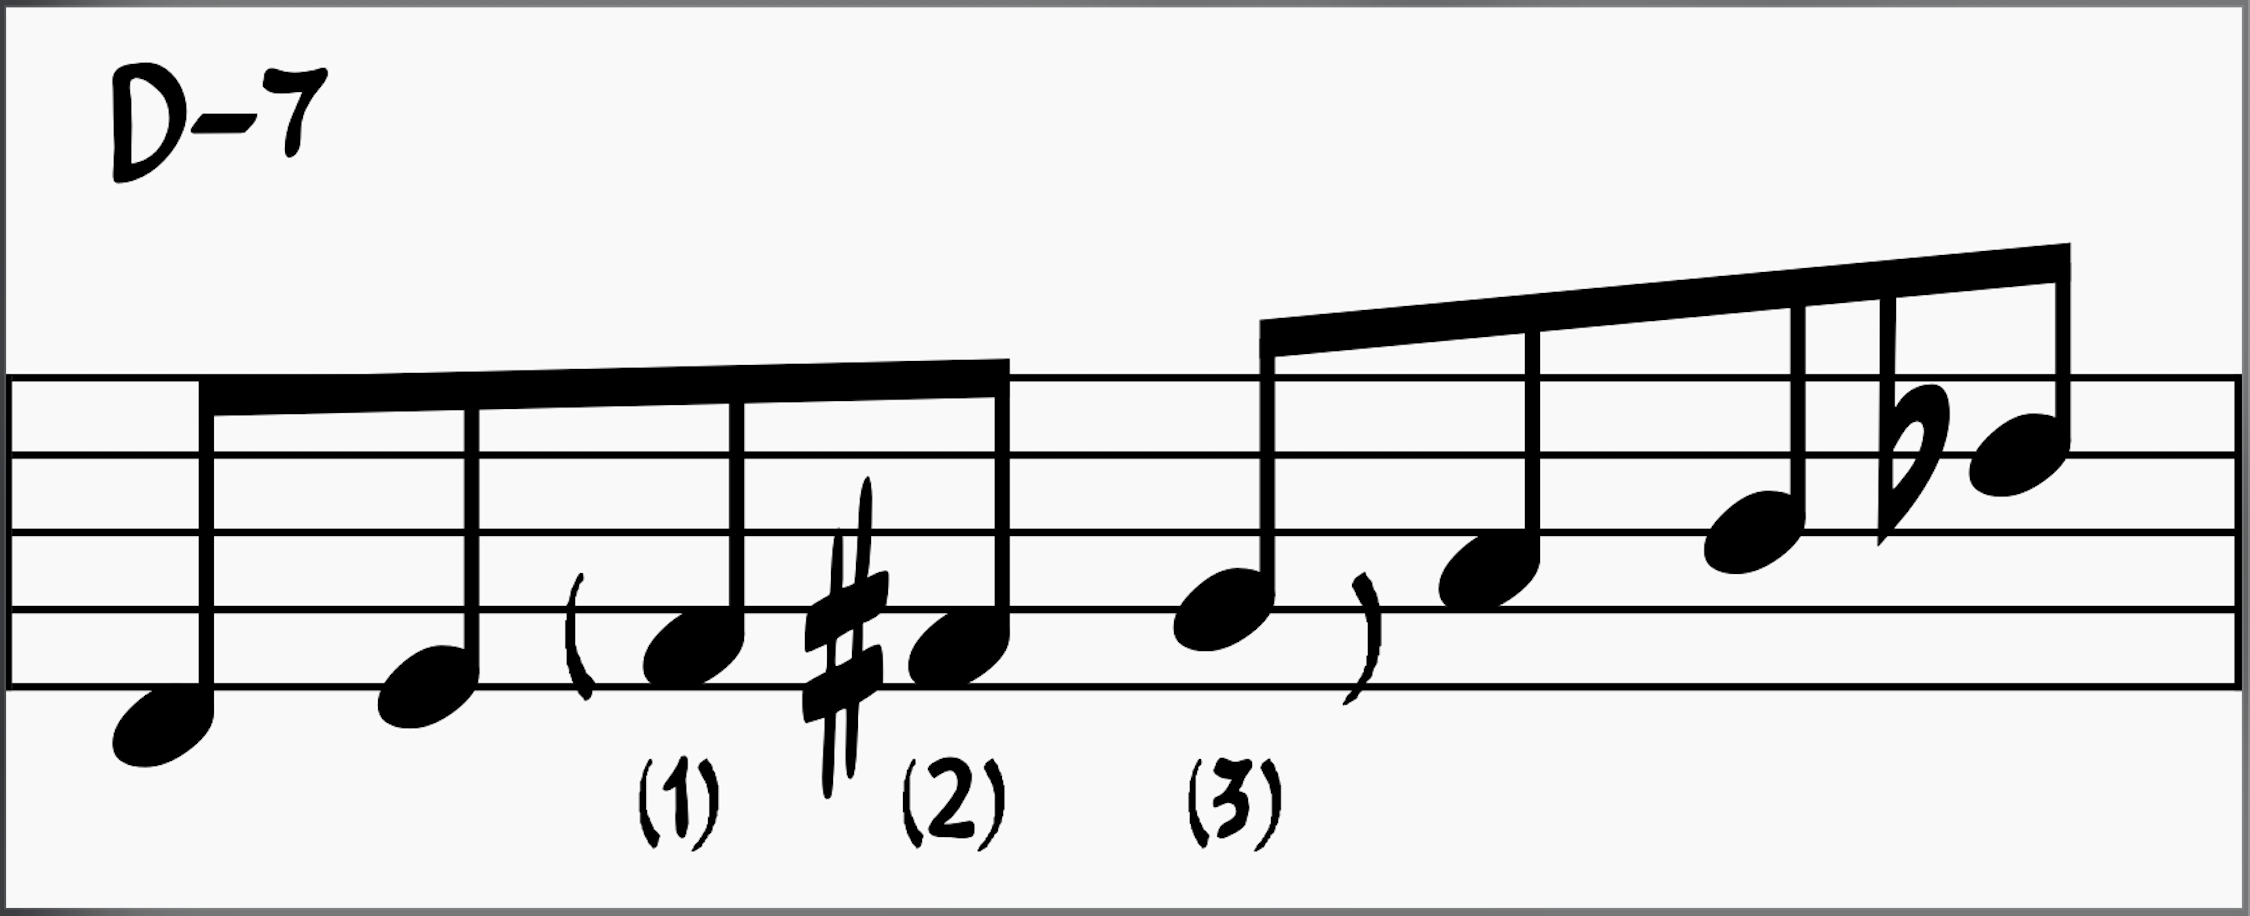 Musical phrasing showing chromatic passing tones